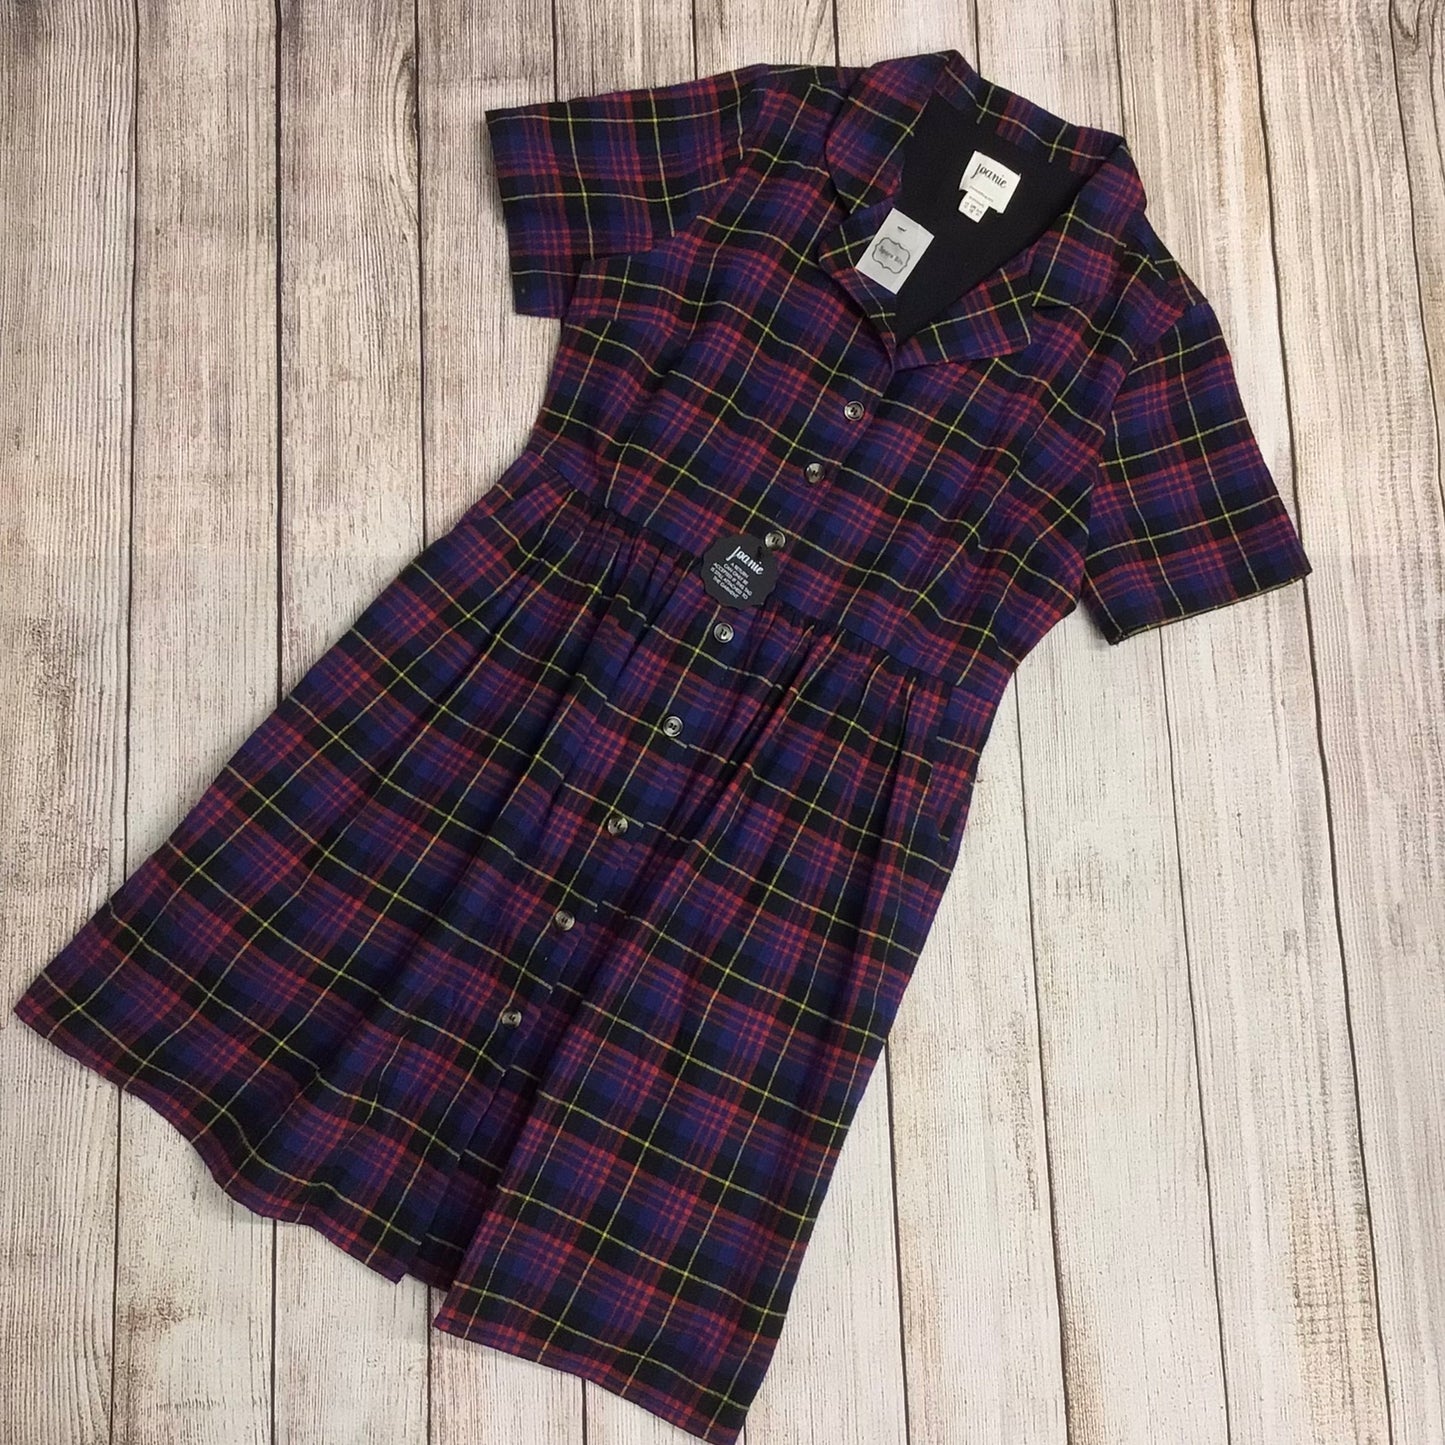 BNWT Joanie Purple Check Print Shirt Dress w/Pockets 100% Cotton RRP£65 Size 16